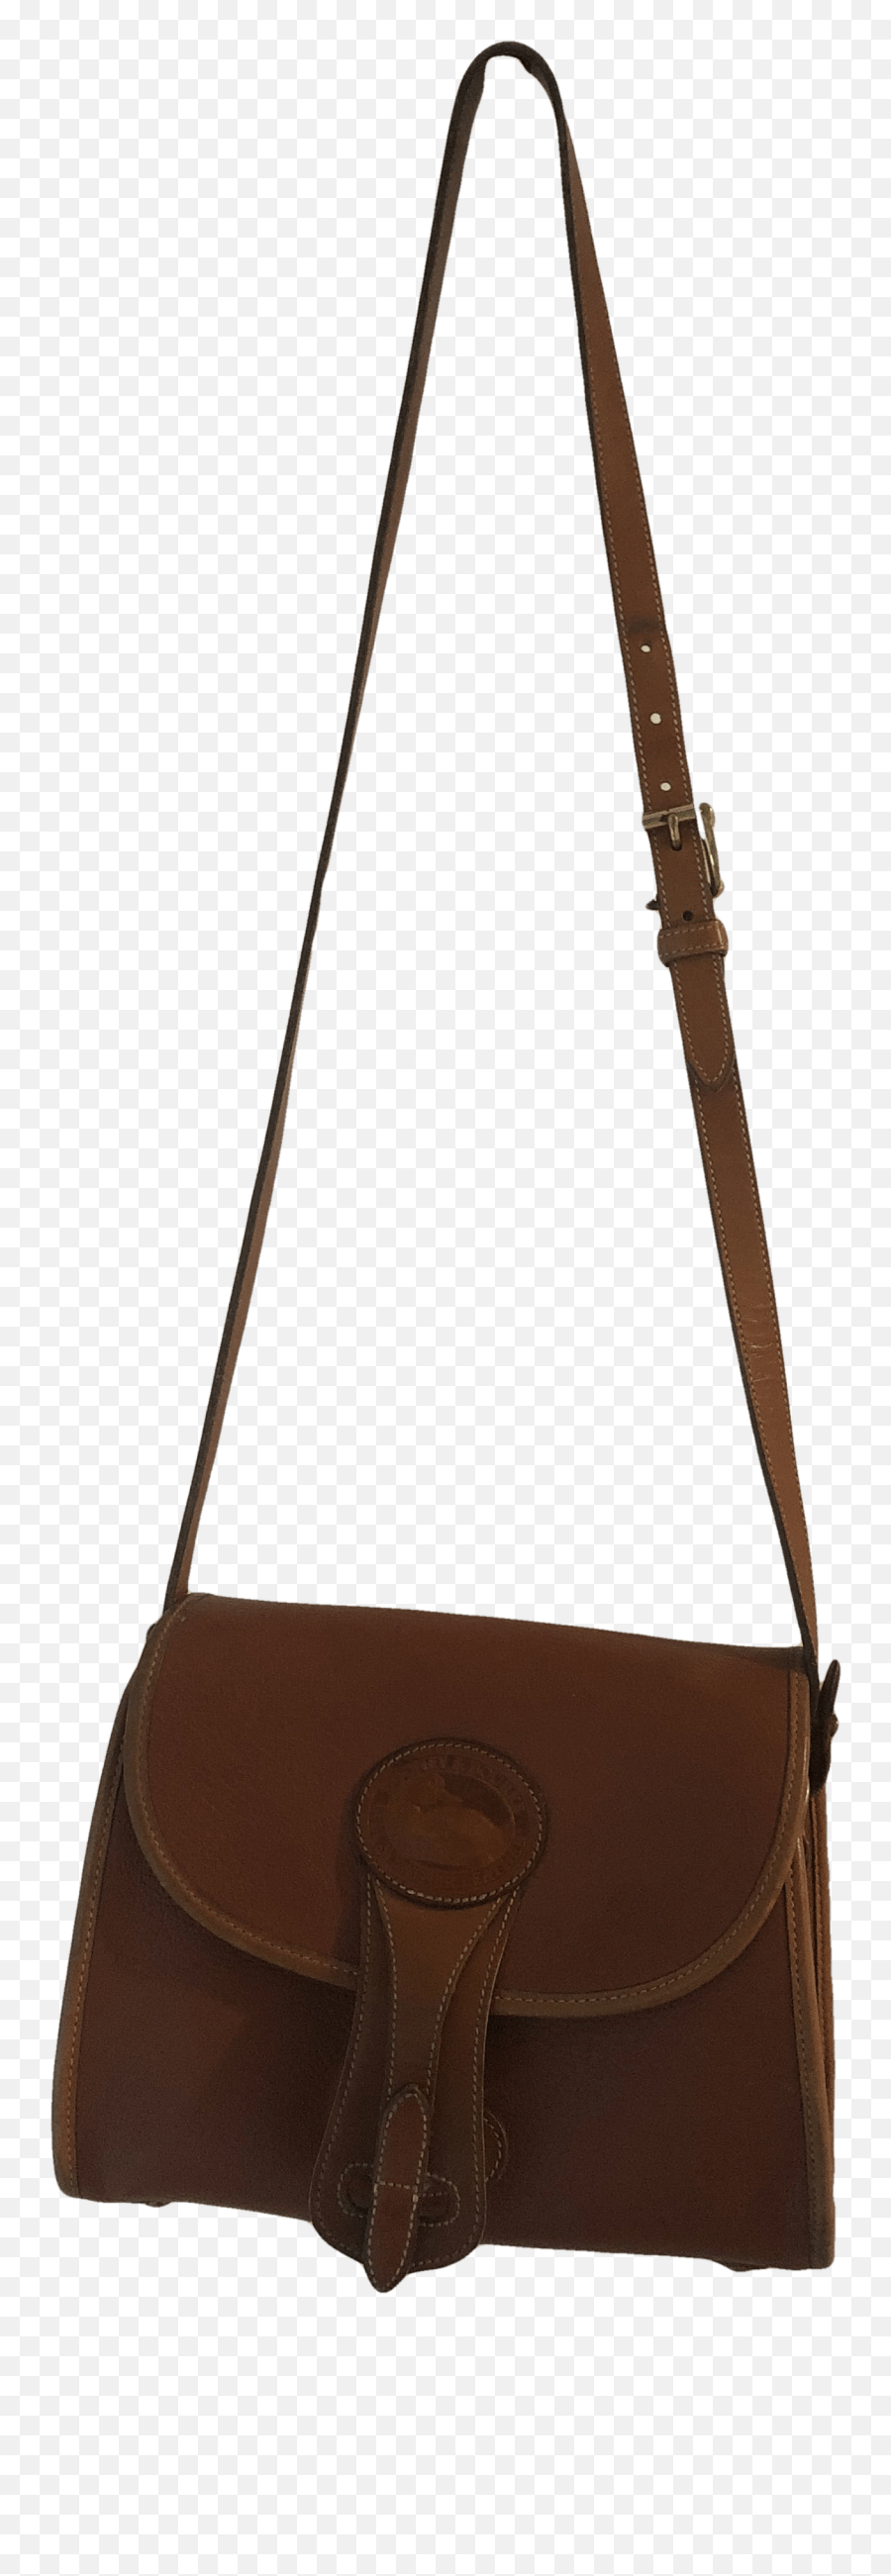 Brown Leather Shoulder Bag By Dooney U0026 Bourke Emoji,Dooney And Bourke Logo